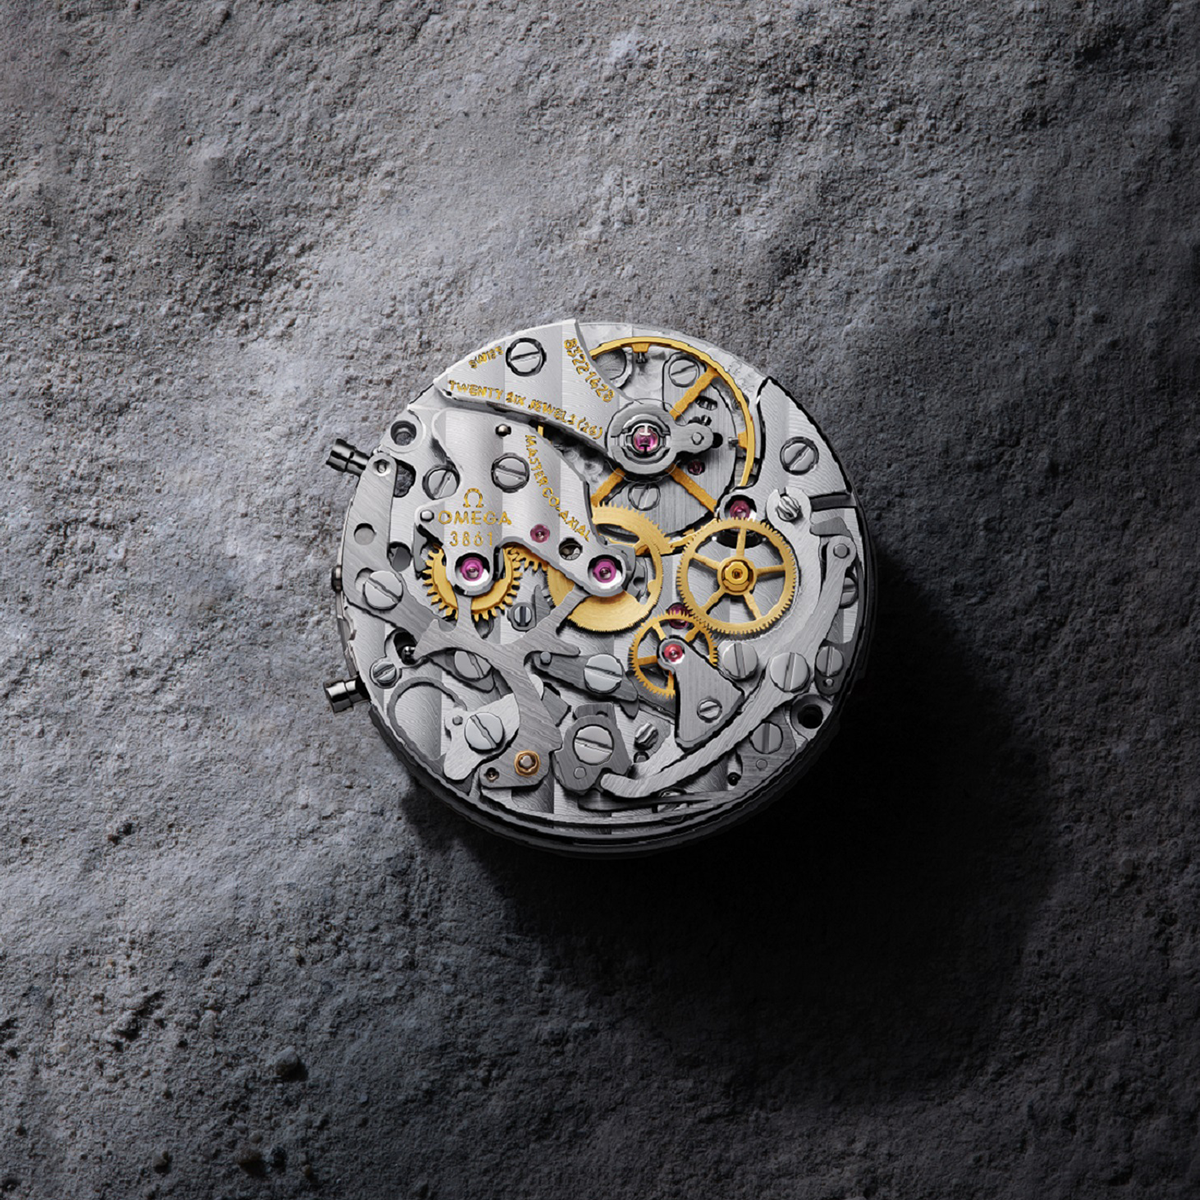 OMEGA's watchmaking heritage